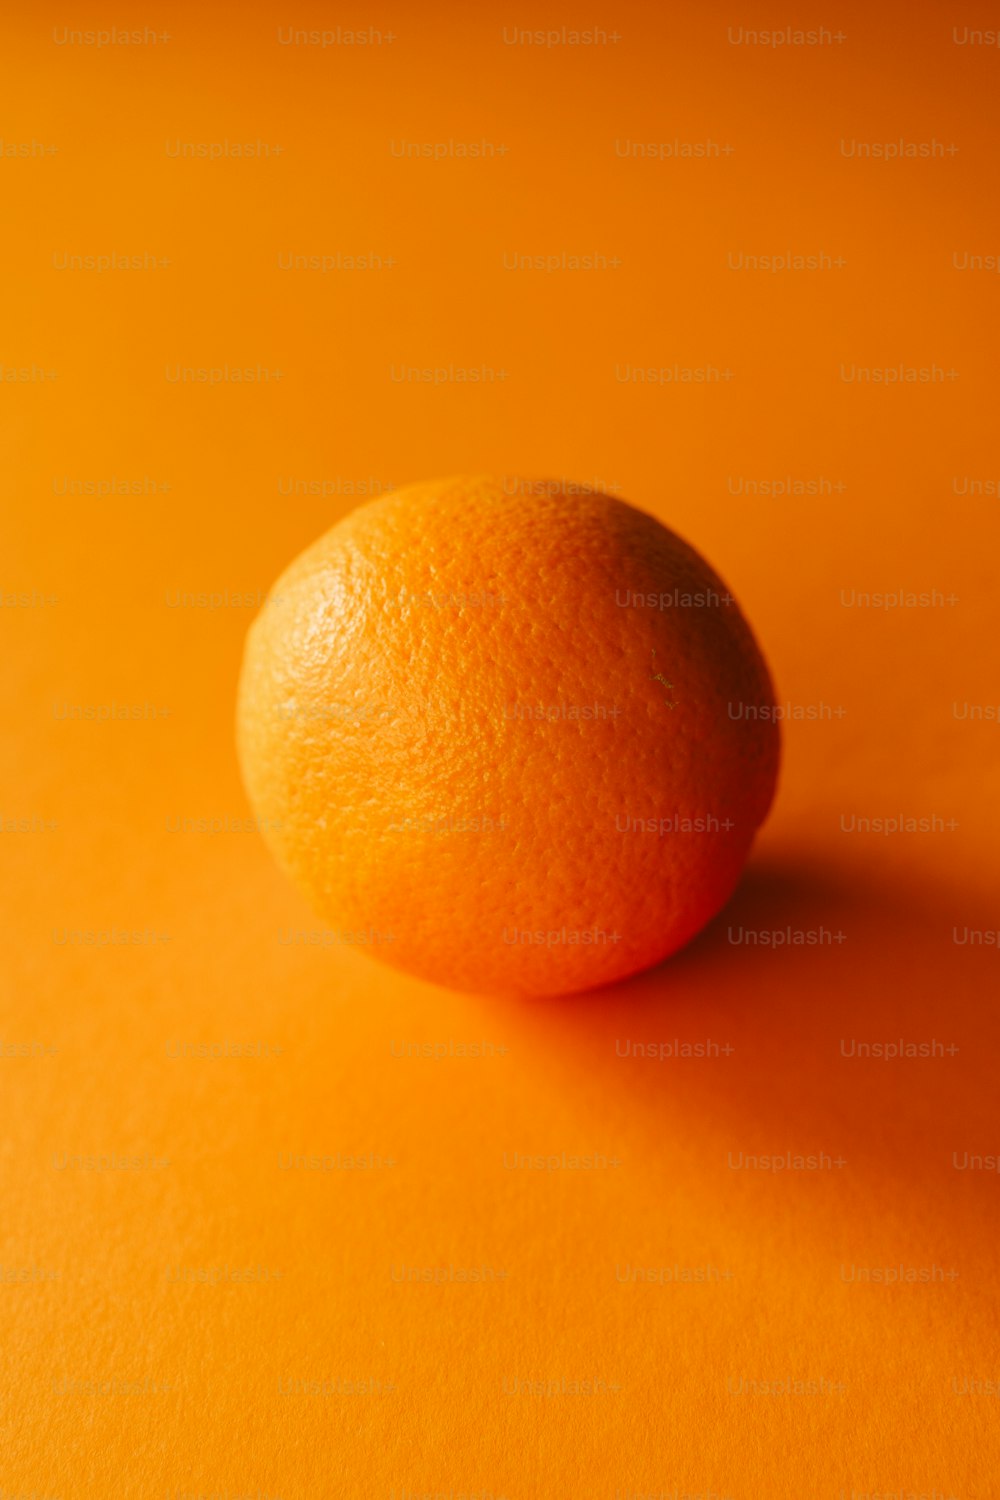 550+ Orange Background Pictures  Download Free Images on Unsplash